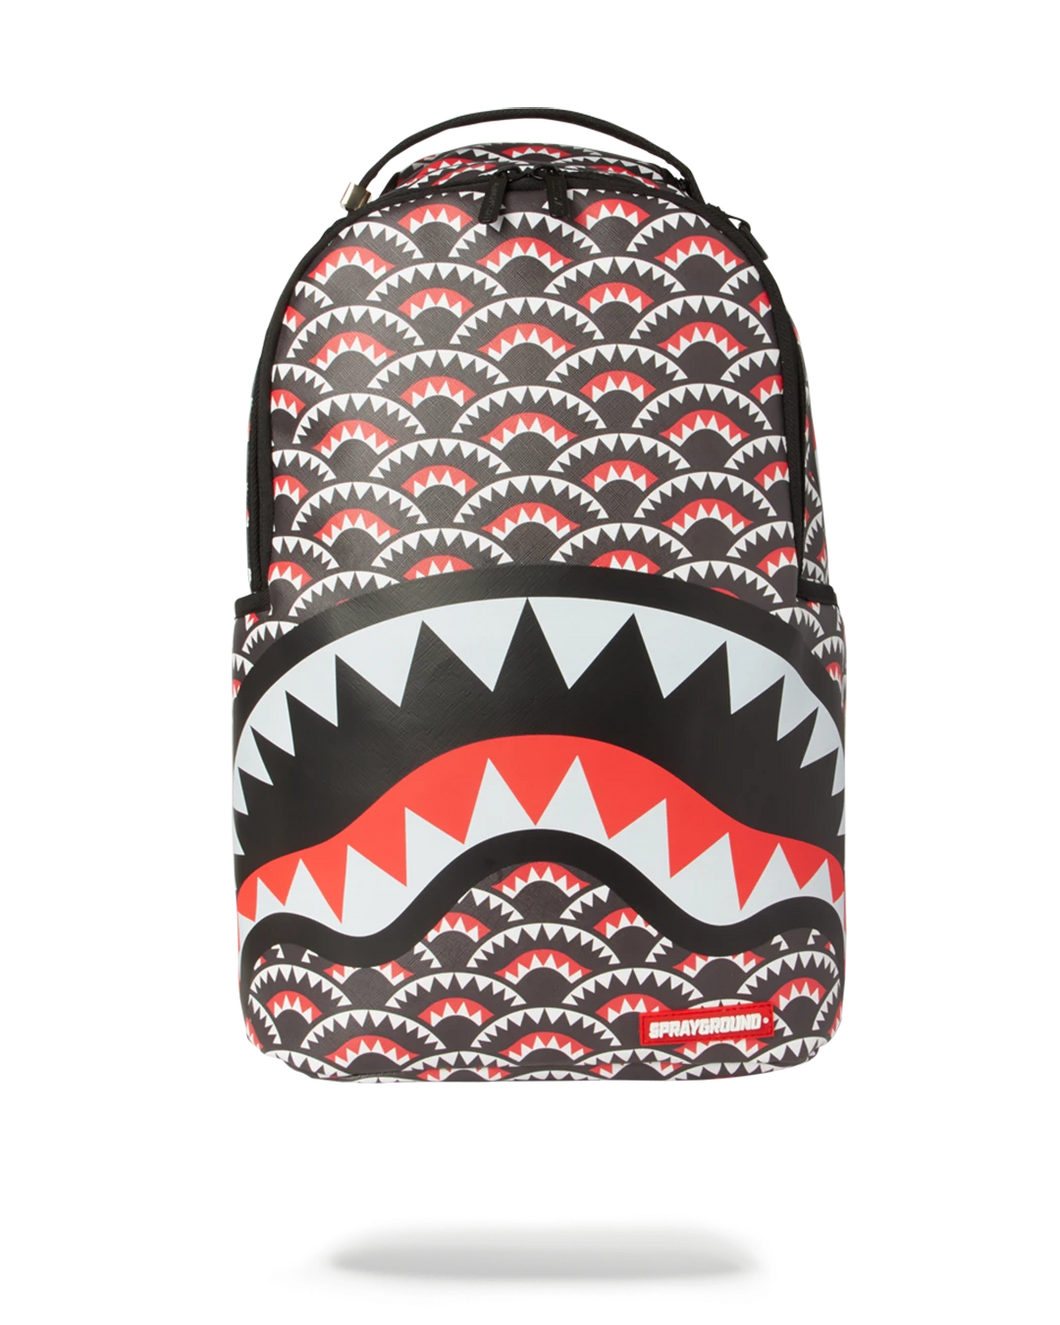 Sprayground Monogram Shark mouth Backpack